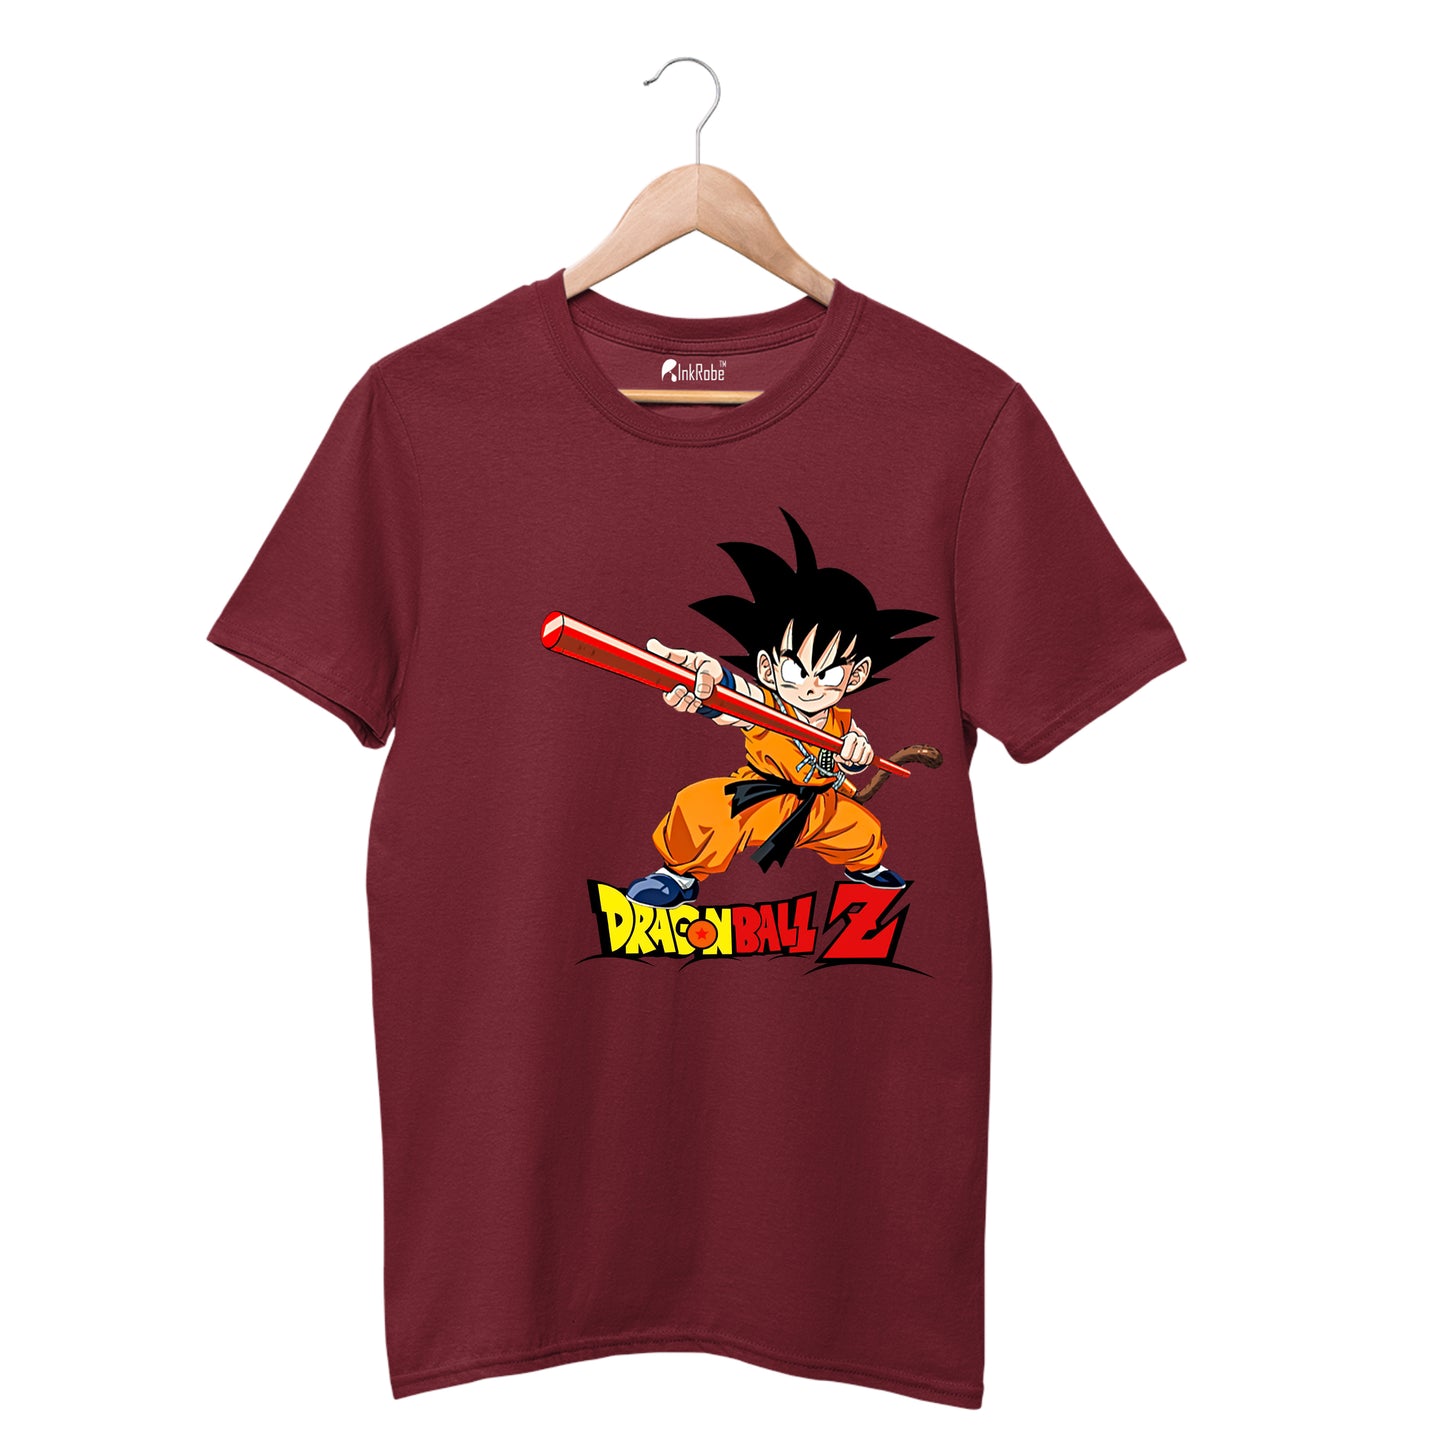 Dragonball z - T-Shirt